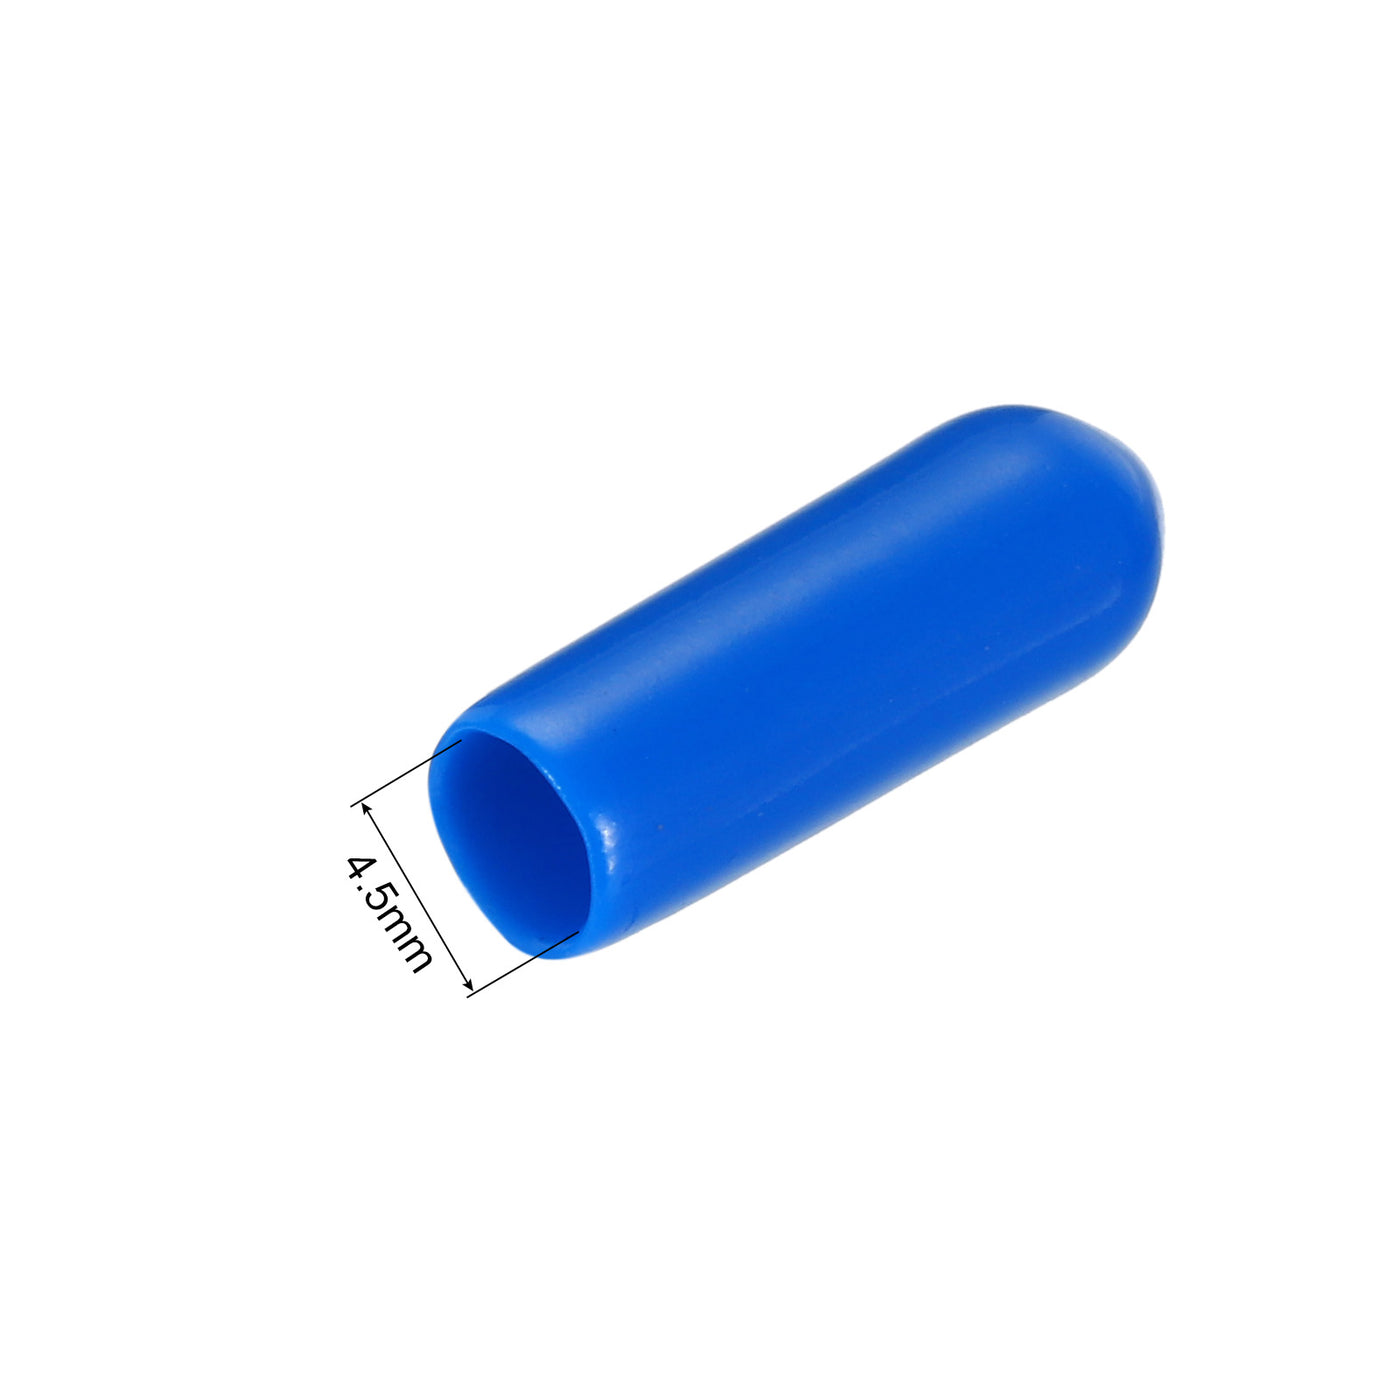 uxcell Uxcell 100pcs Rubber End Caps 4.5mm ID Vinyl PVC Round Tube Bolt Cap Cover Screw Thread Protectors Blue